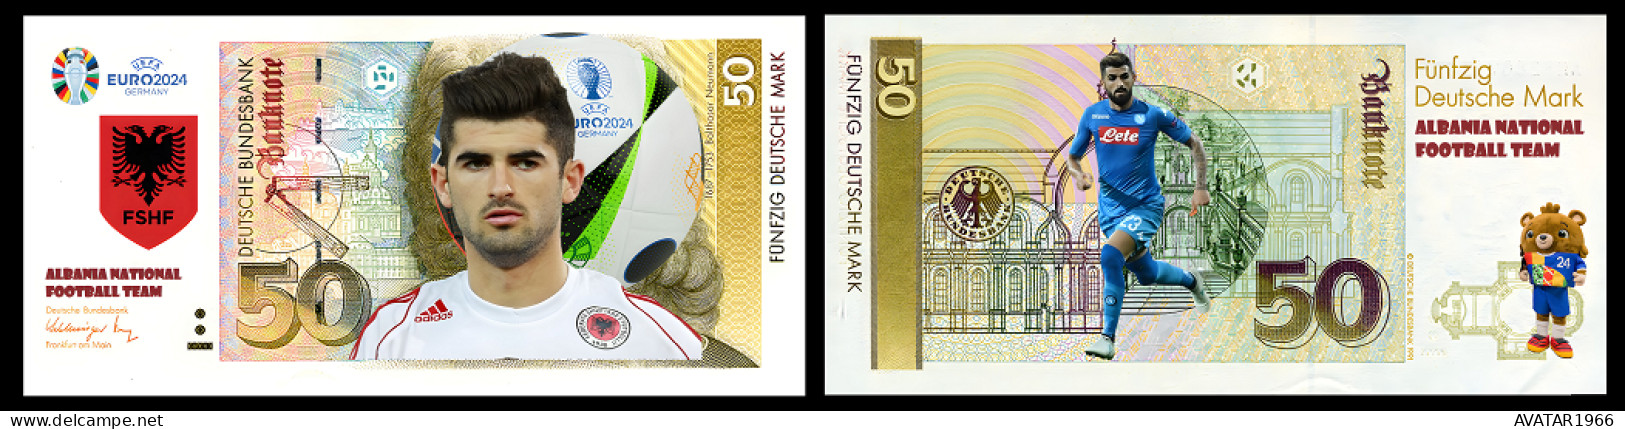 UEFA European Football Championship 2024 Qualified Country Albania 8 Pieces Germany Fantasy Paper Money - Gedenkausgaben